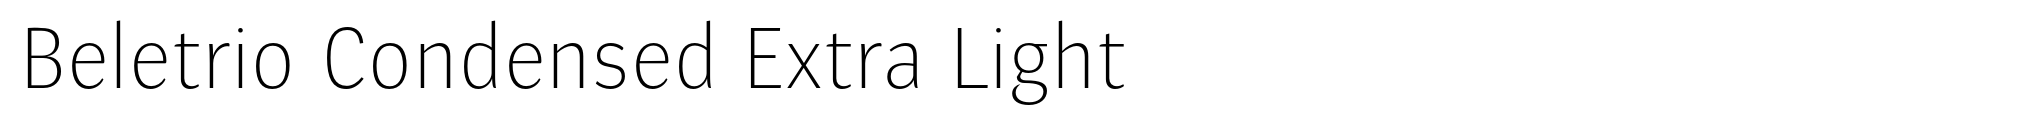 Beletrio Condensed Extra Light image